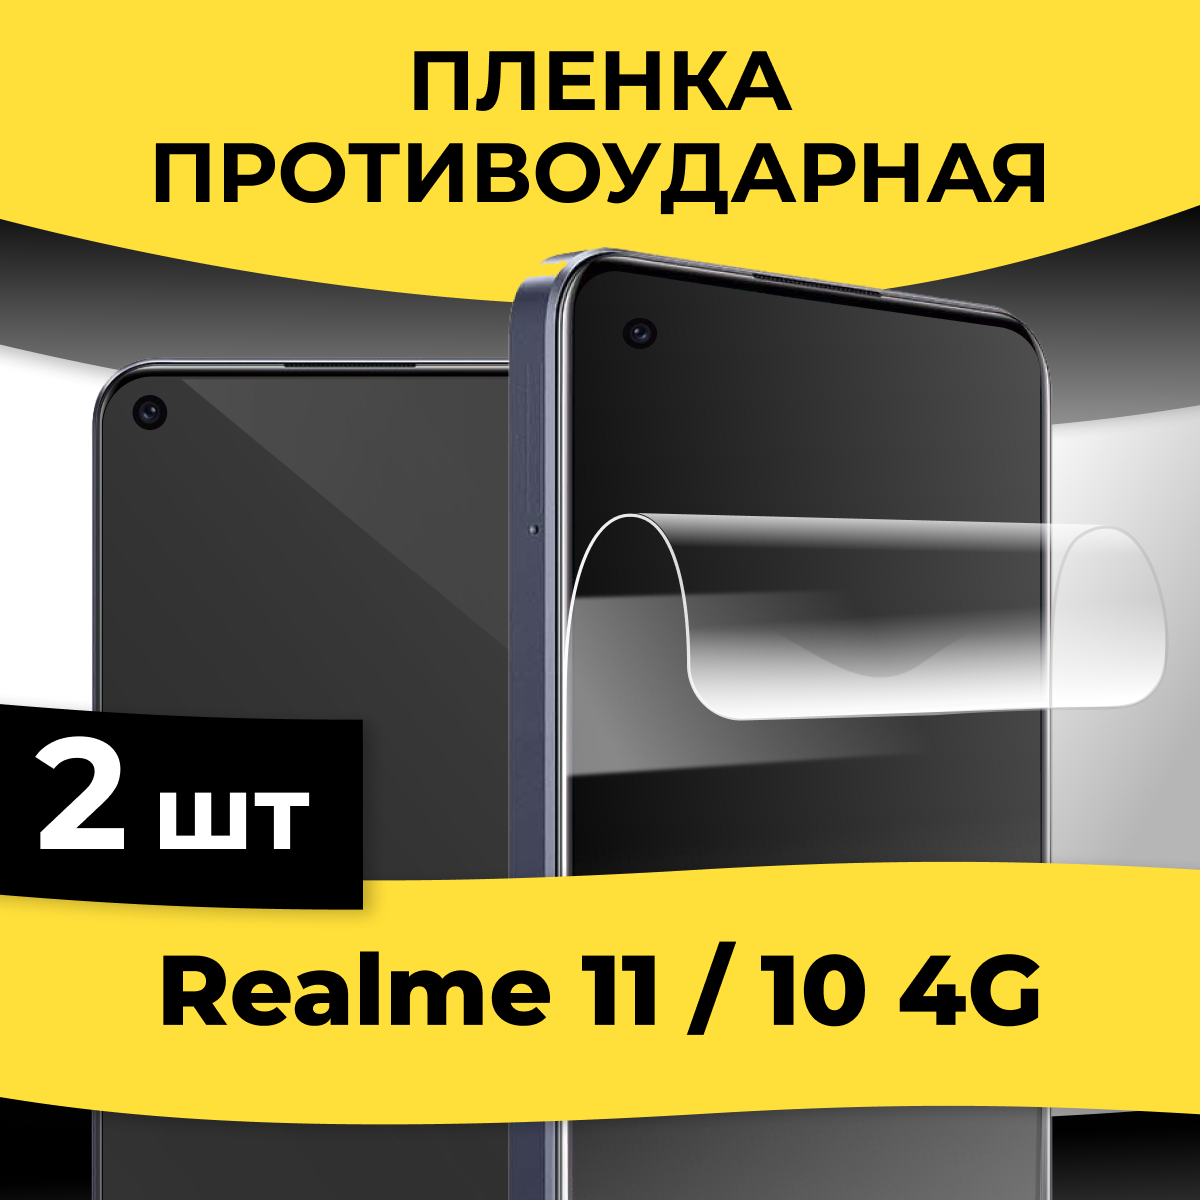 Комплект 2 шт. Самовосстанавливающаяся пленка для смартфона Realme 11 и Realme 10 4G / Защитная гидрогелевая пленка на телефон Реалми 11 и Реалми 10 4Г / Глянцевая пленка